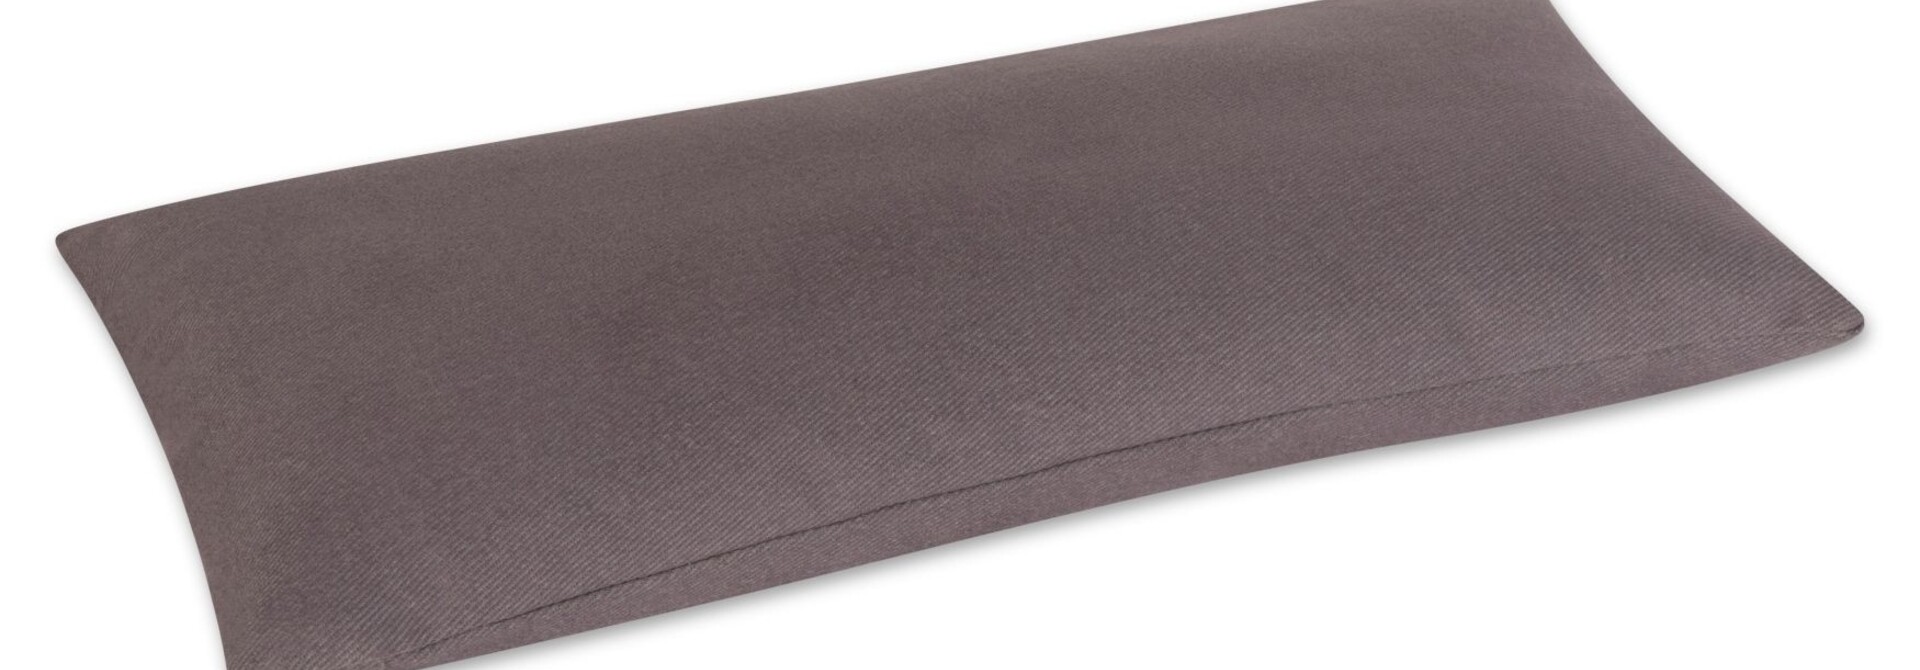 Yogisha Meditation Bench Cushion Deluxe - Gray